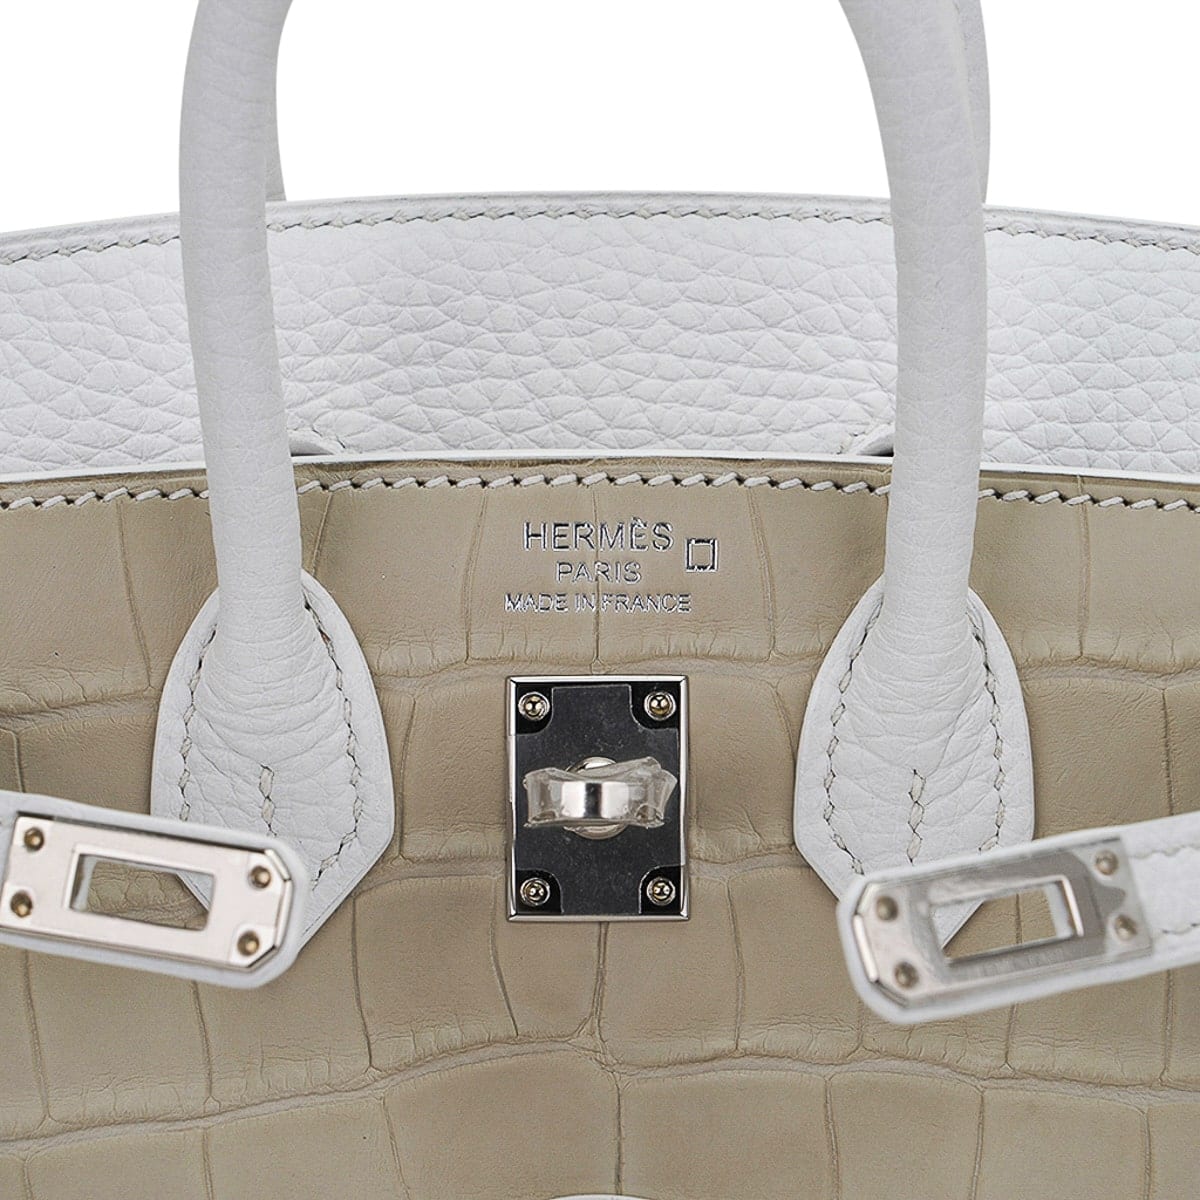 Hermes Limited Edition Birkin 20 Sellier Bag Neige (Snow) White